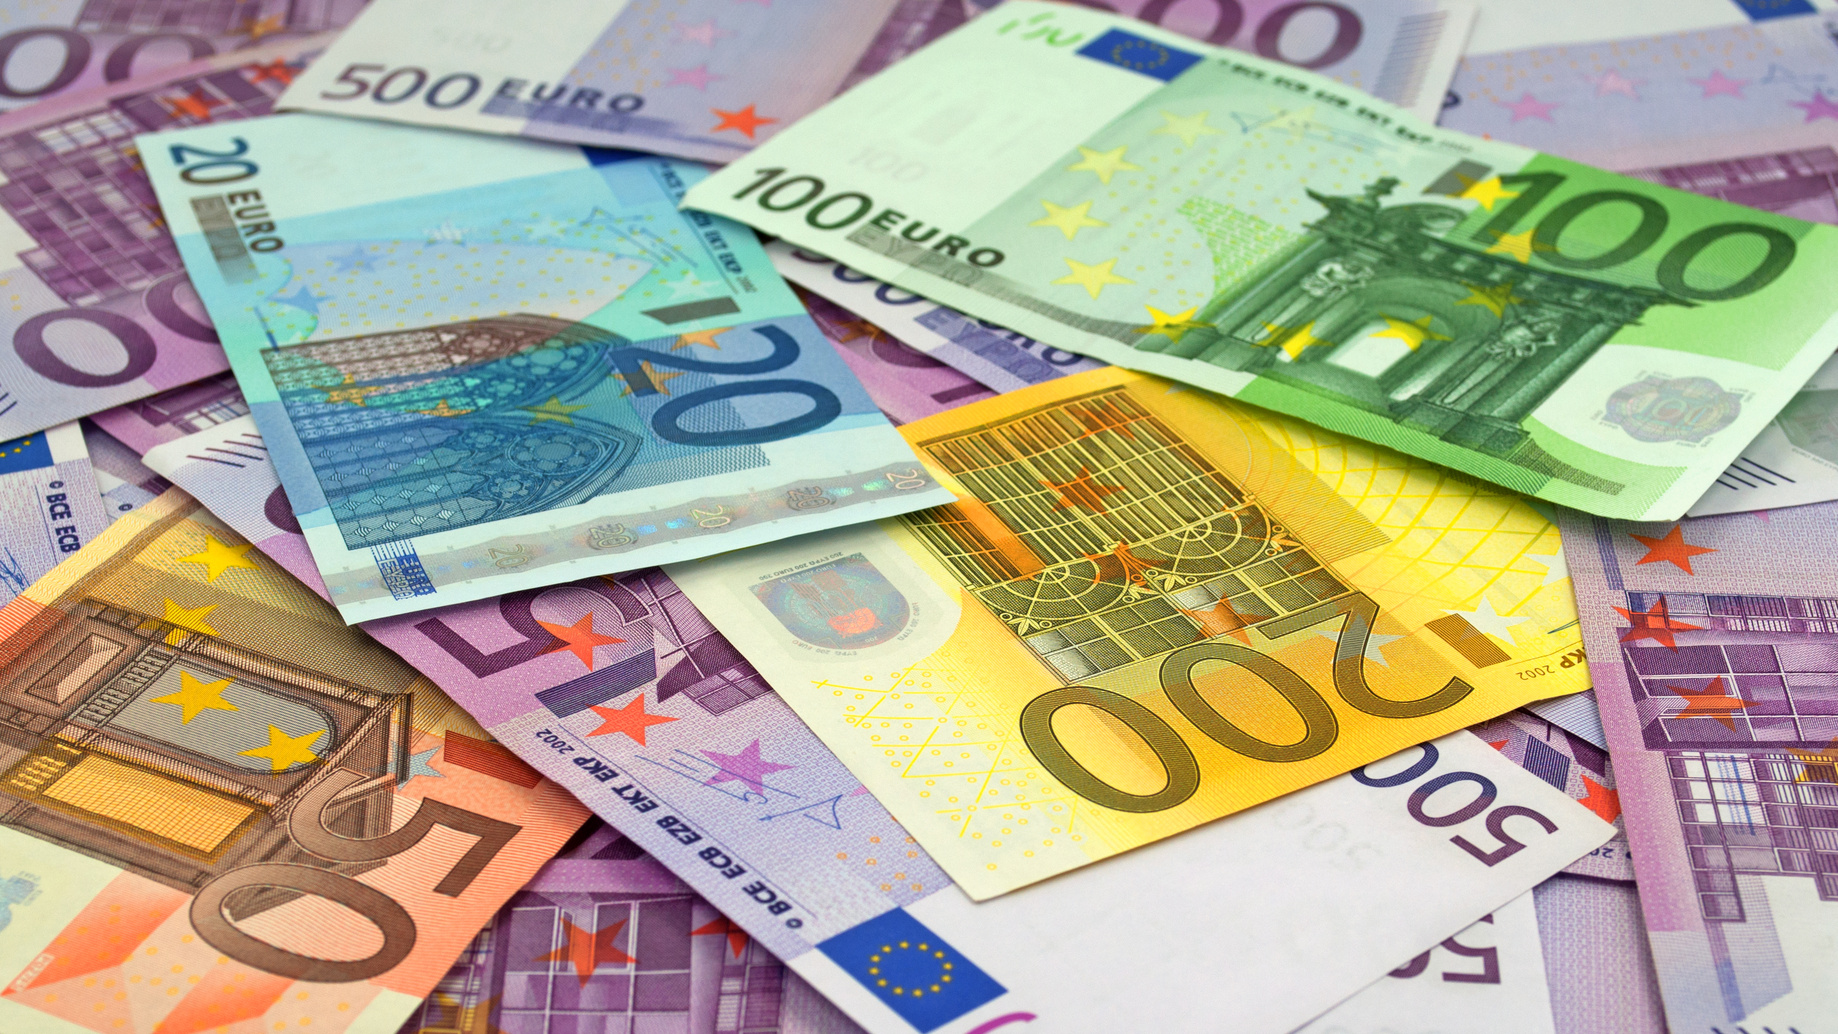 Euro currency. Деньги евро. Евро фото. Деньги купюры евро. Евро купюры и монеты.